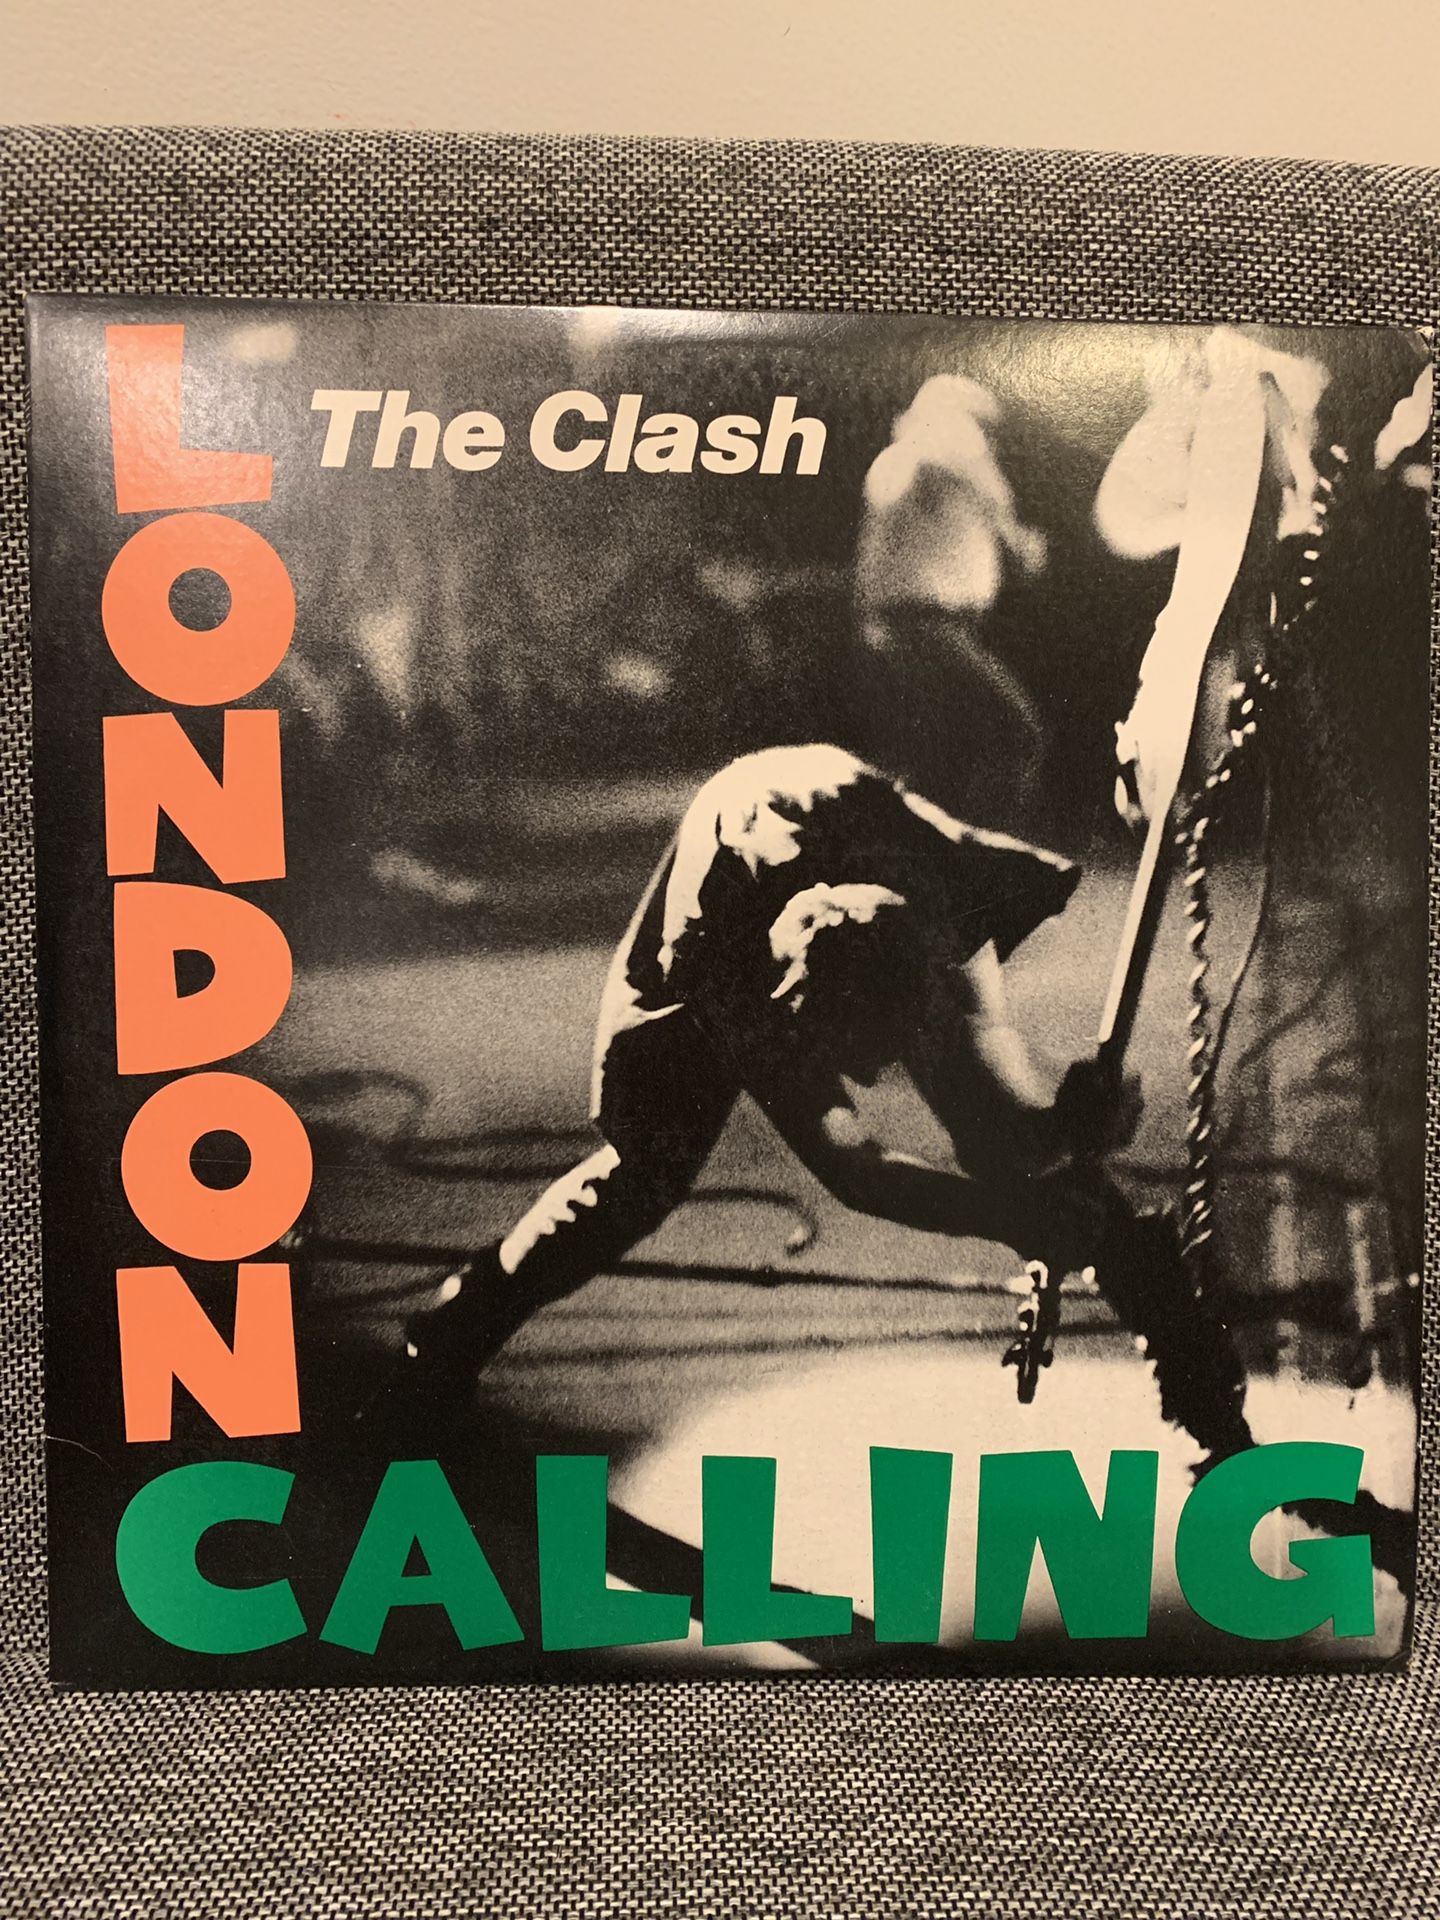 The Clash London Calling 2 Record LP 1979